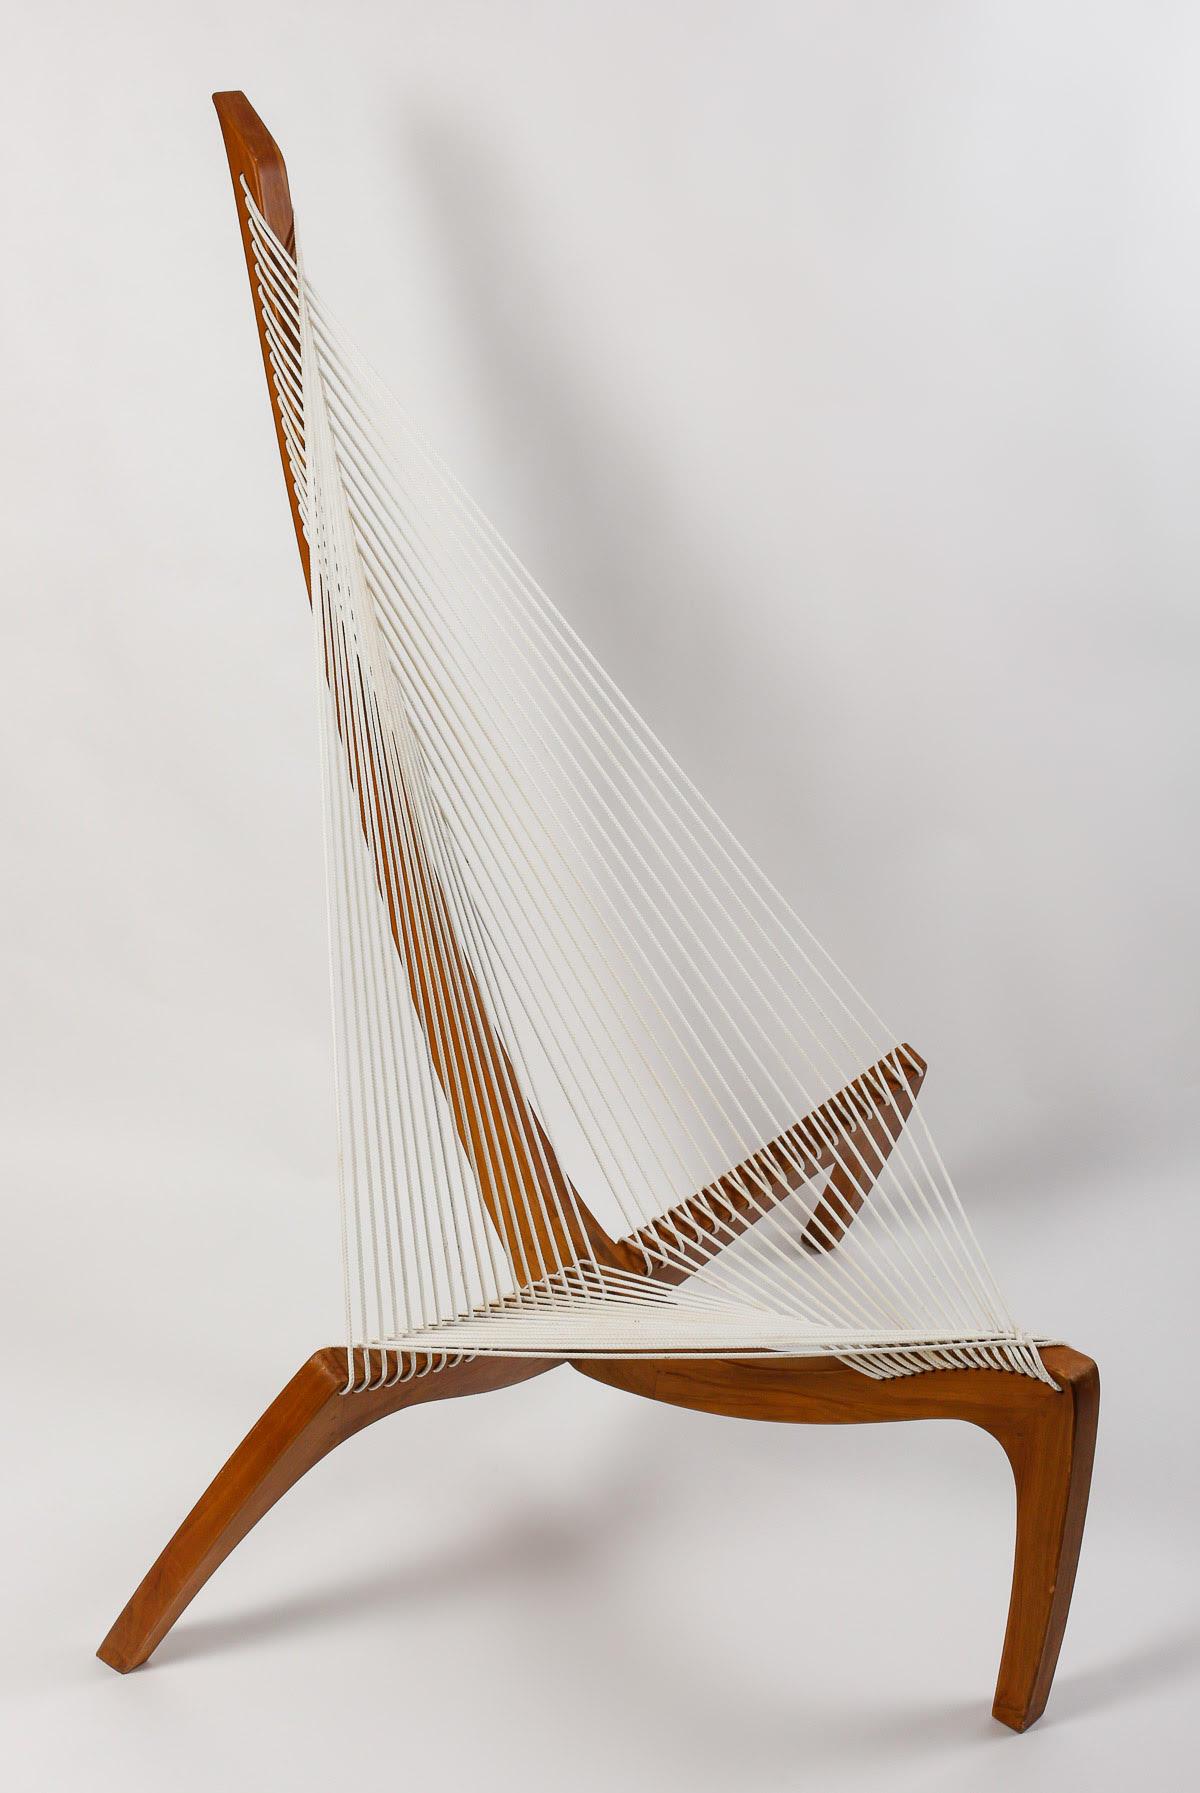 Pair of Model Harpe armchairs by Jørgen Høvelskov, 20th century.

Pair of armchairs, Model Harpe by Jørgen Høvelskov, Denmark, 20th century.    
h: 136cm , w: 84cm, d: 110cm